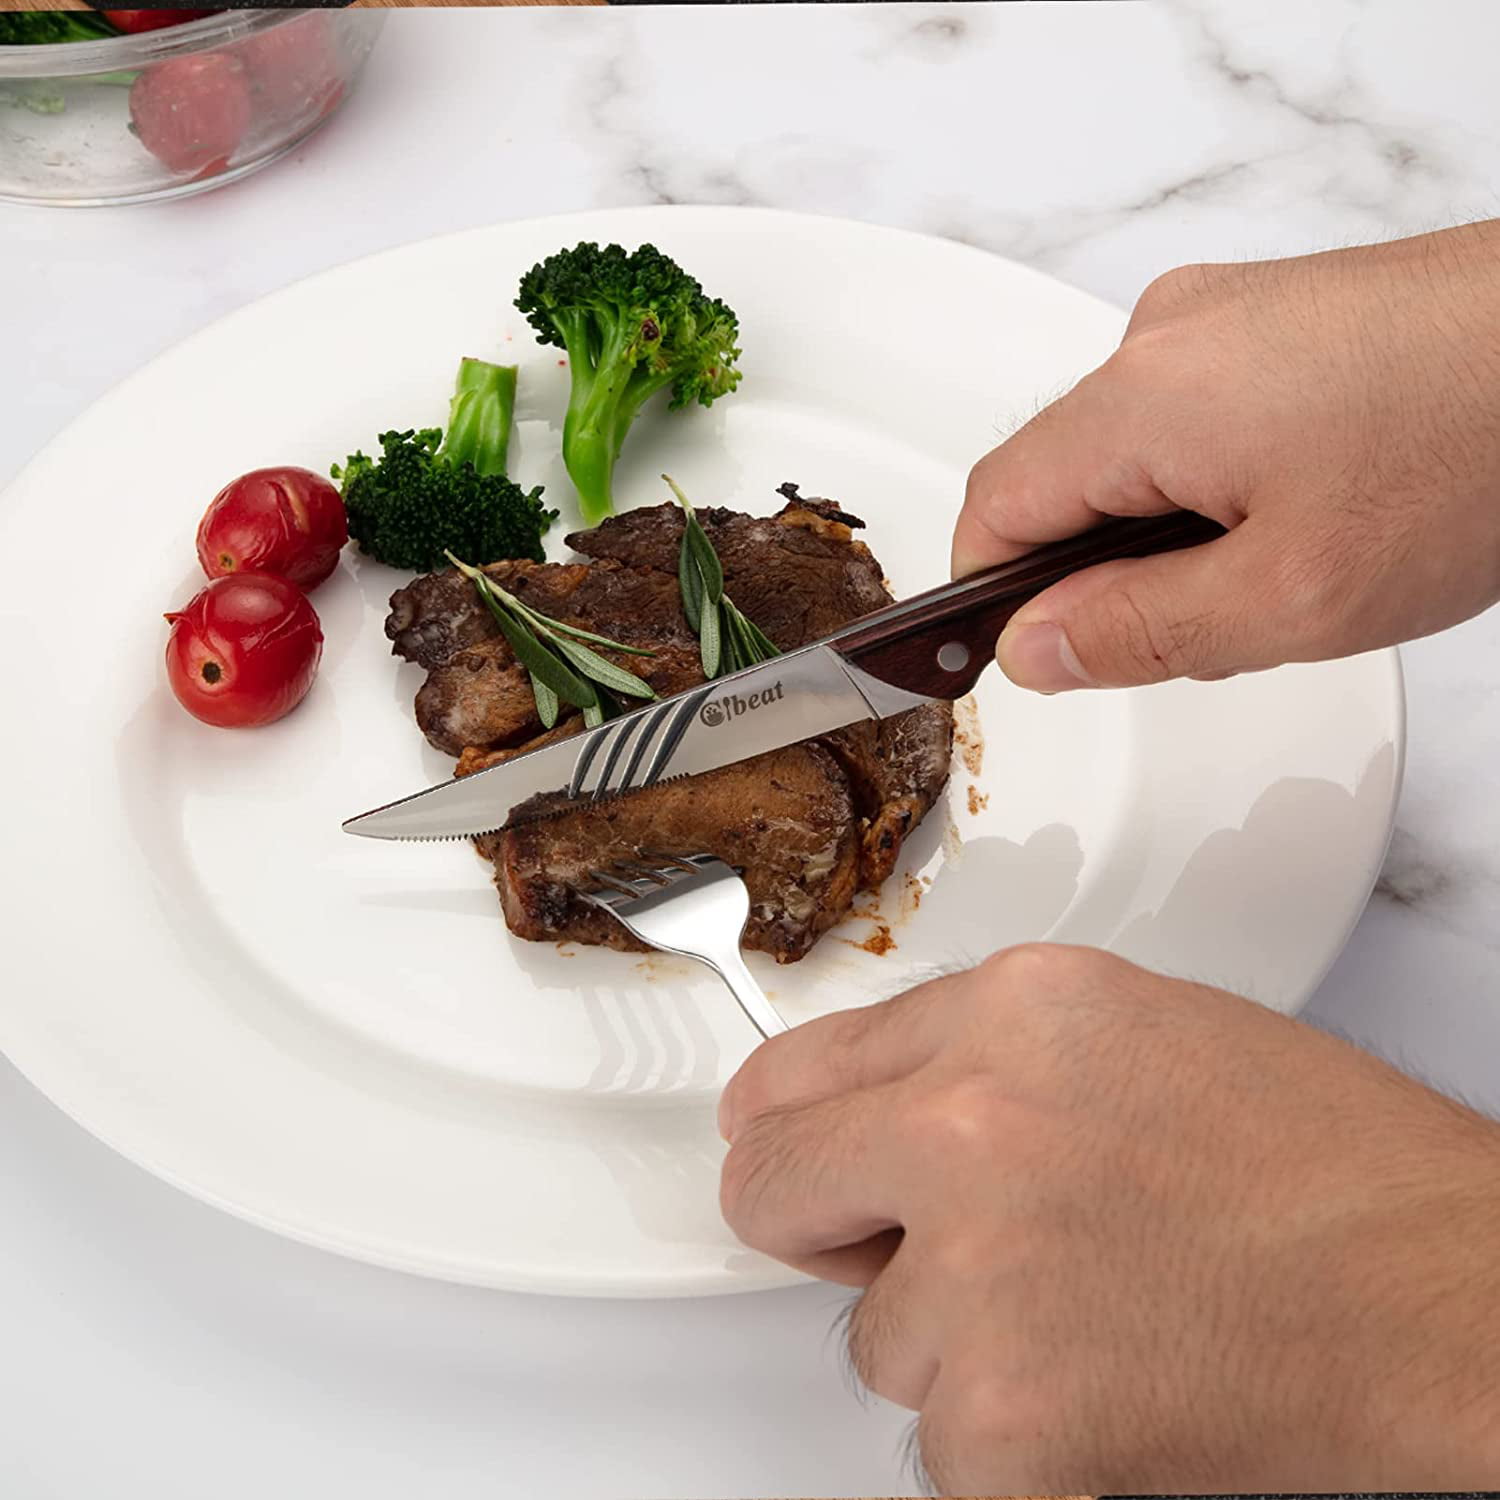 Steak Knife Set of 6, Serrated Steak Knife With Wooden Handle, Professional  Steak Knives, Stainless Steel Cutlery Set, 4×9(W×L)